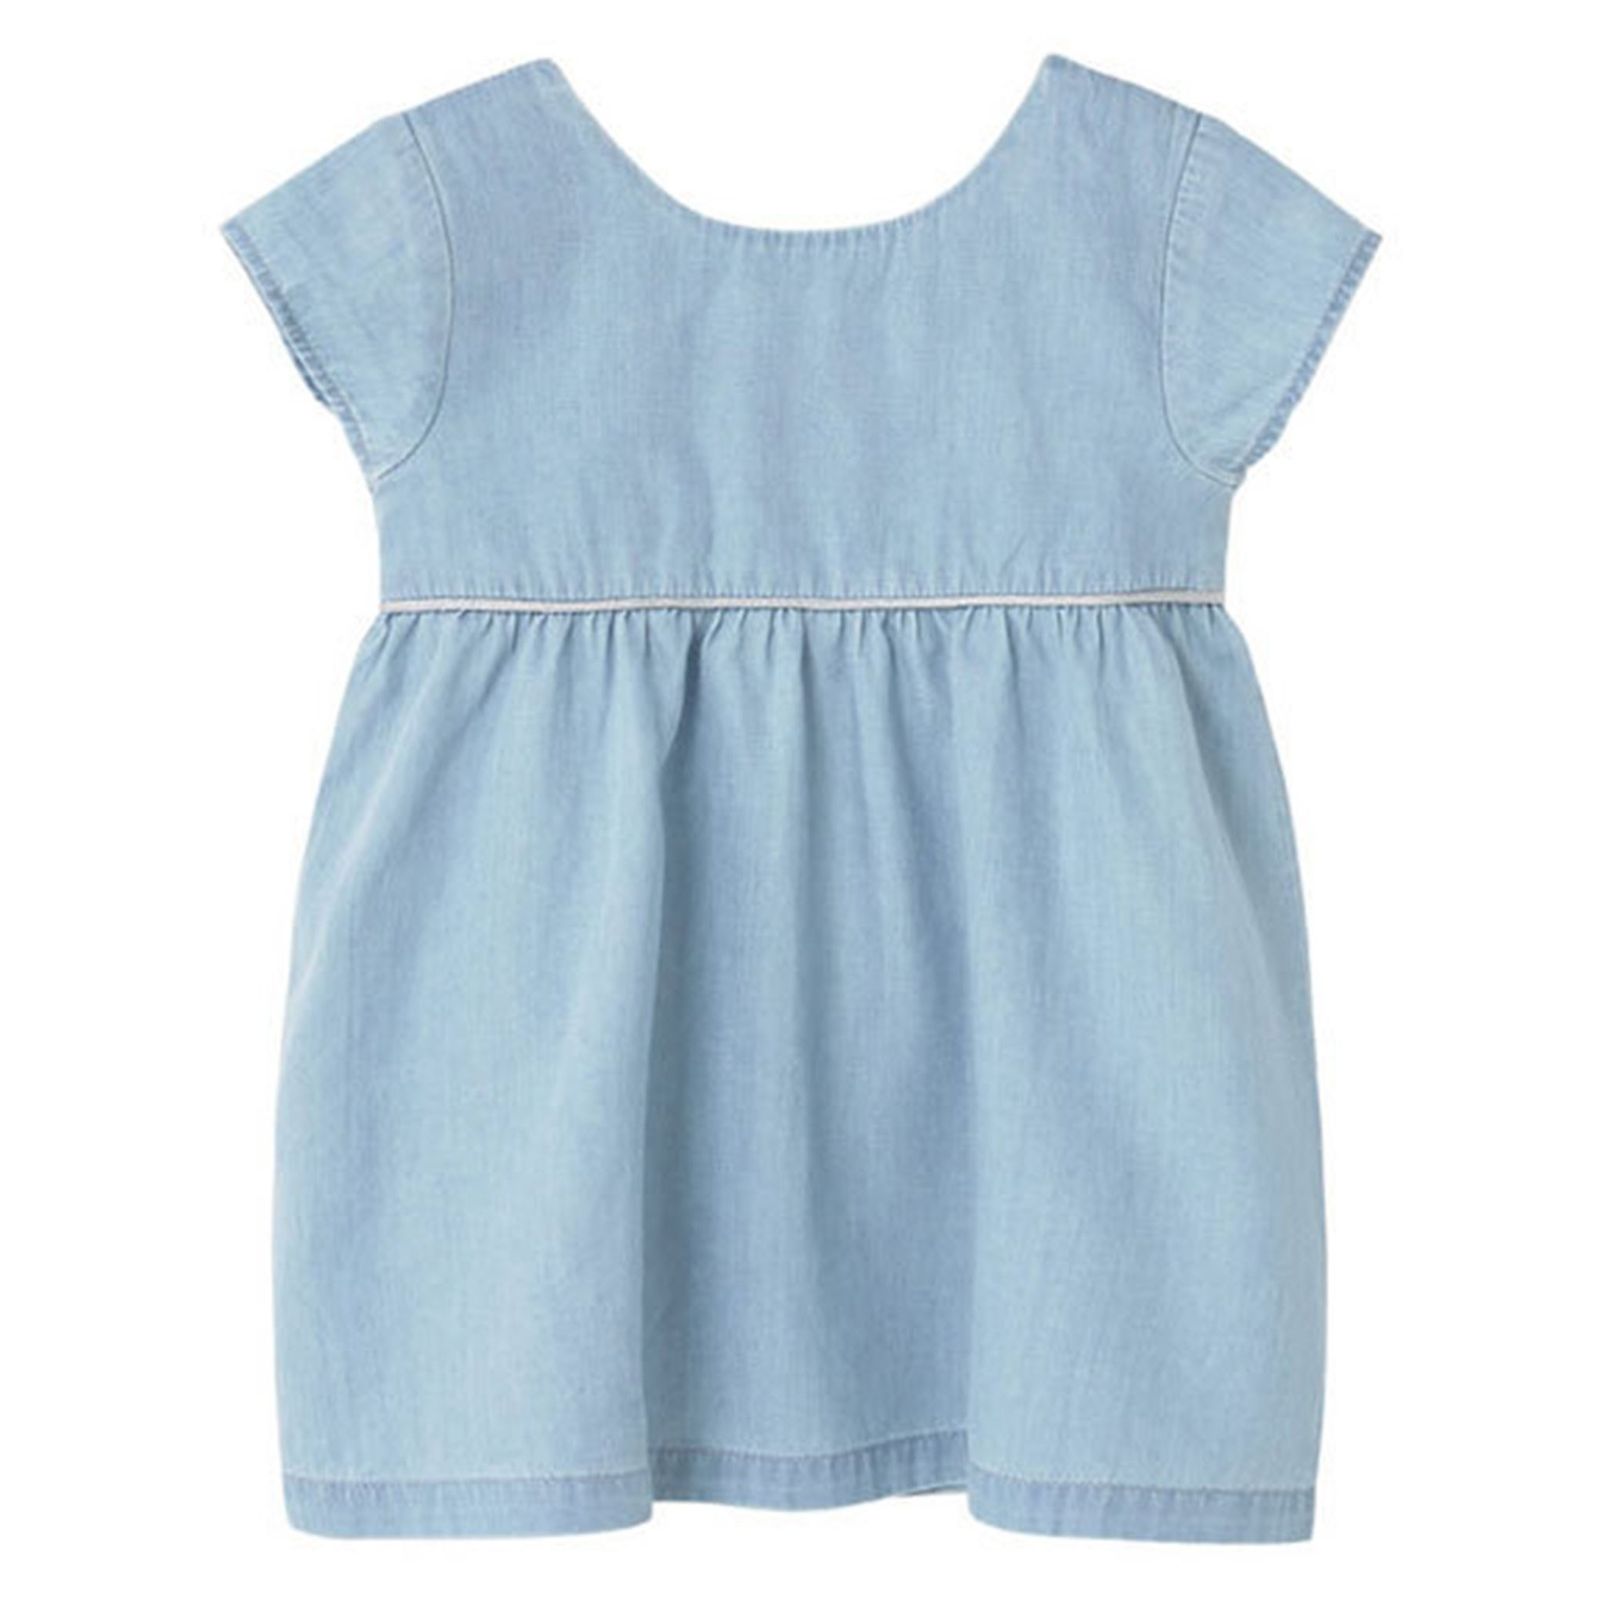 پیراهن جین نوزادی دخترانه - مانگو - آبي روشن - 2